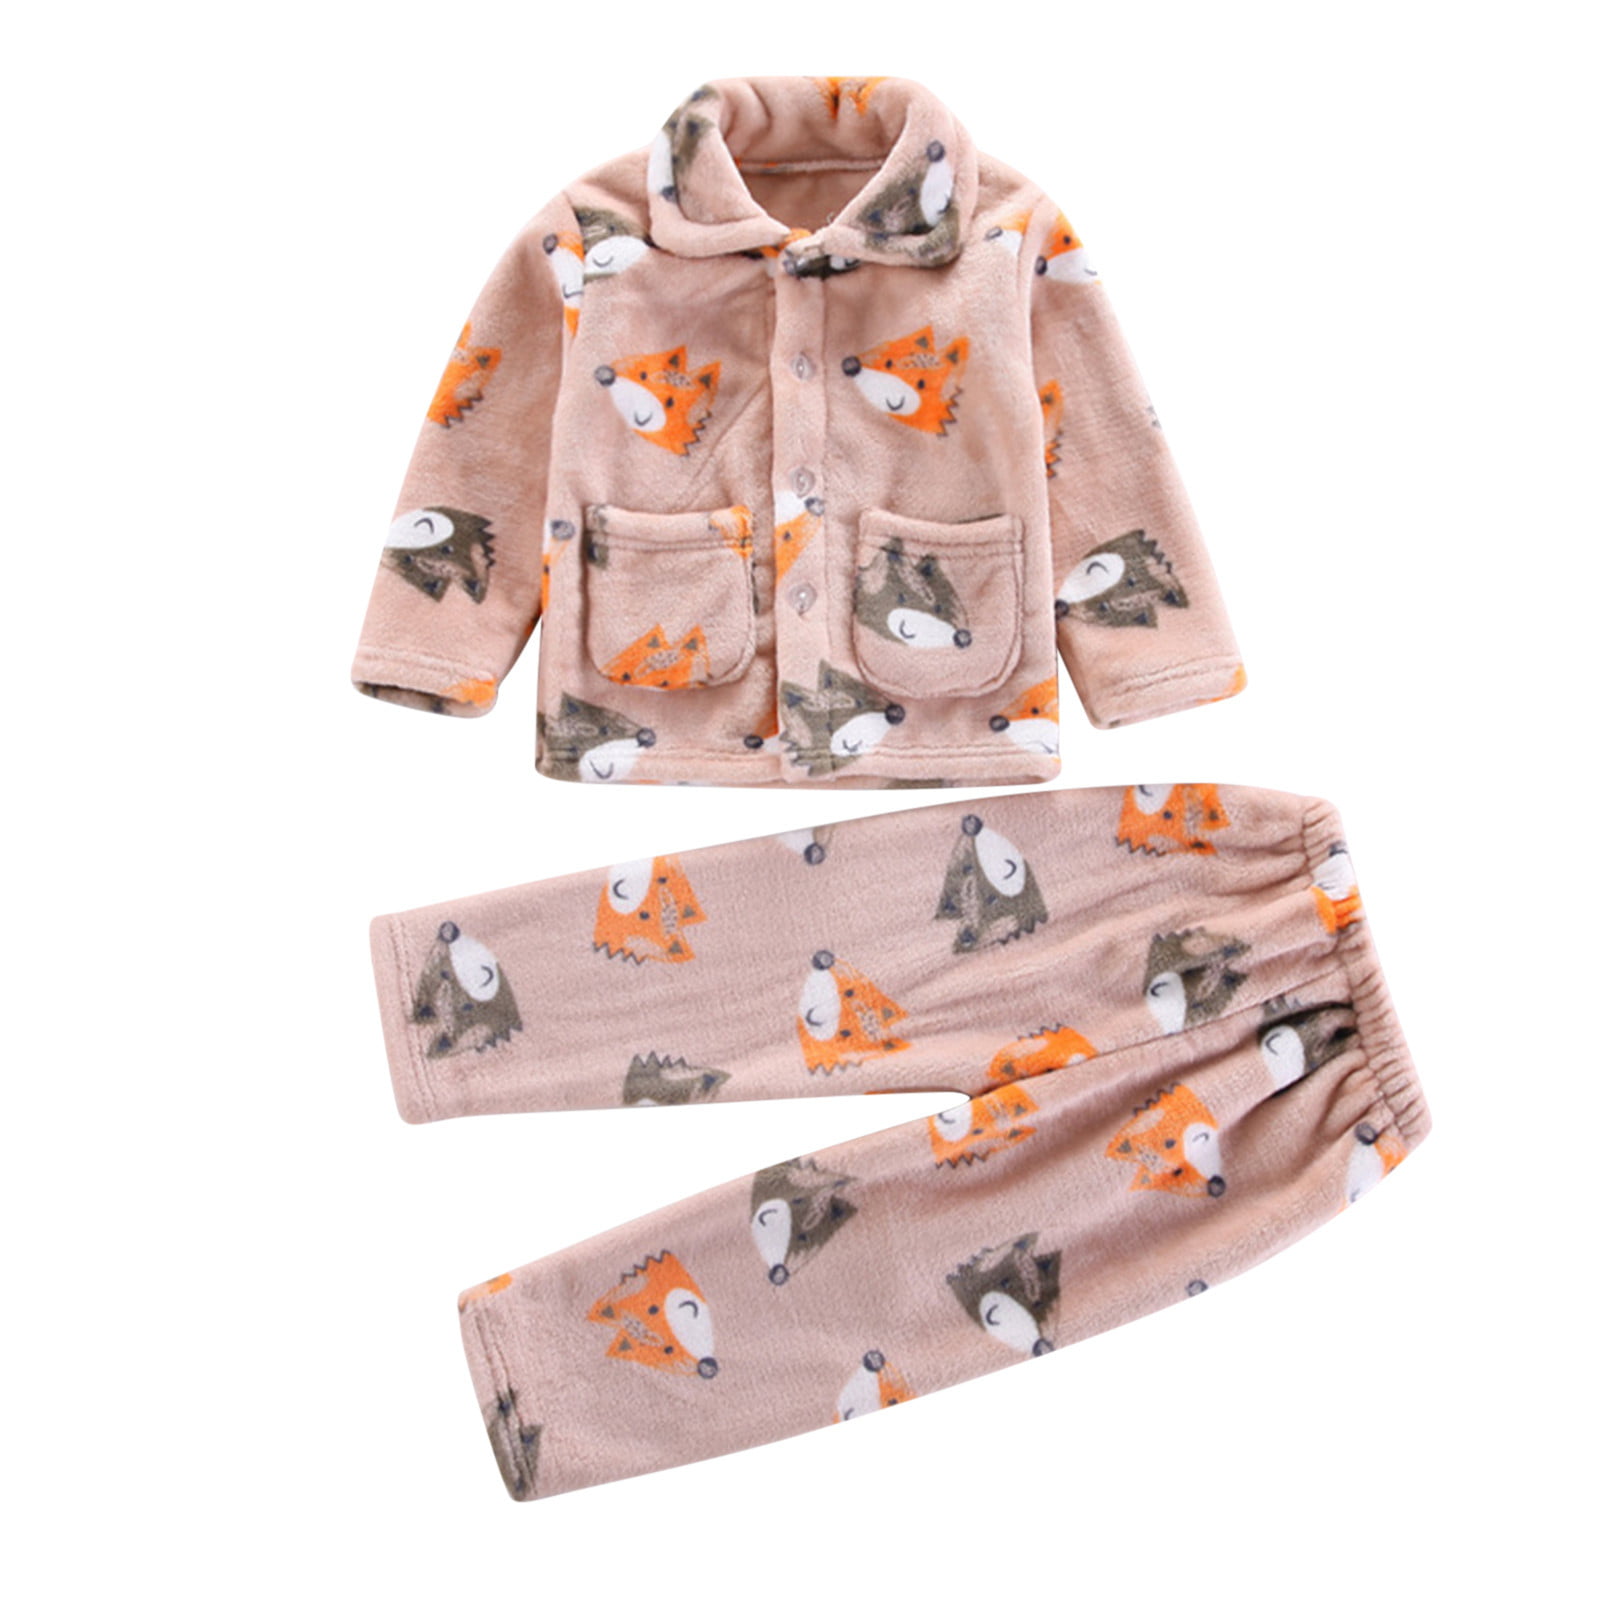 Kids Baby Boys Girls Warm Flannel Fleece Towel Robe Bathrobe Soft Pajamas Sleepwear Set 